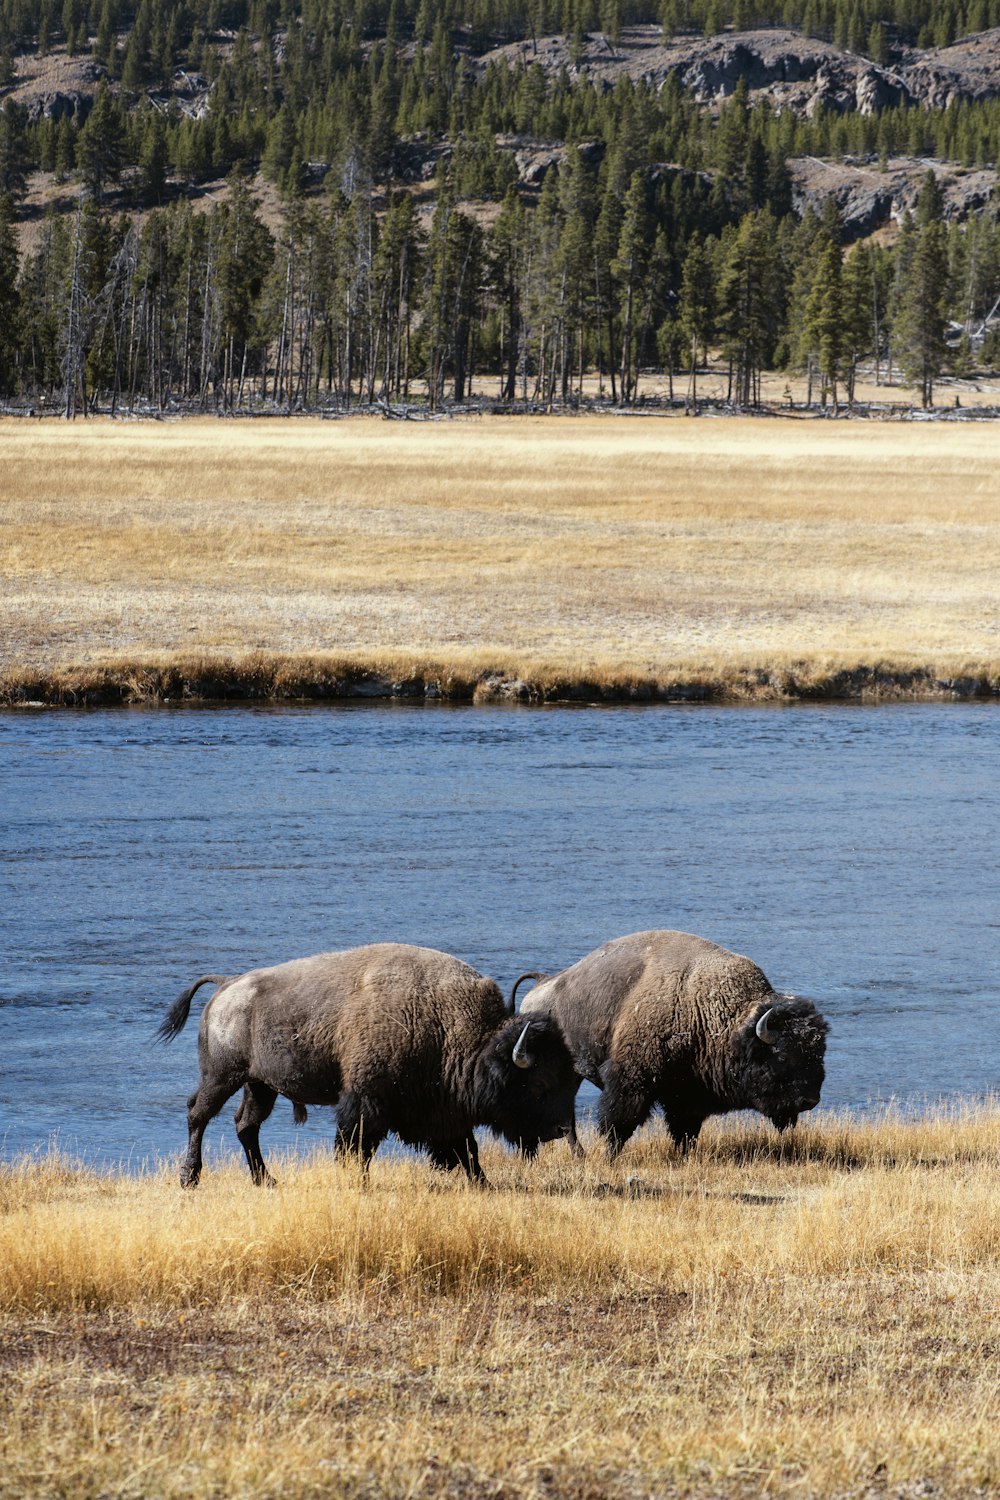 two buffalos are walking along a river bank